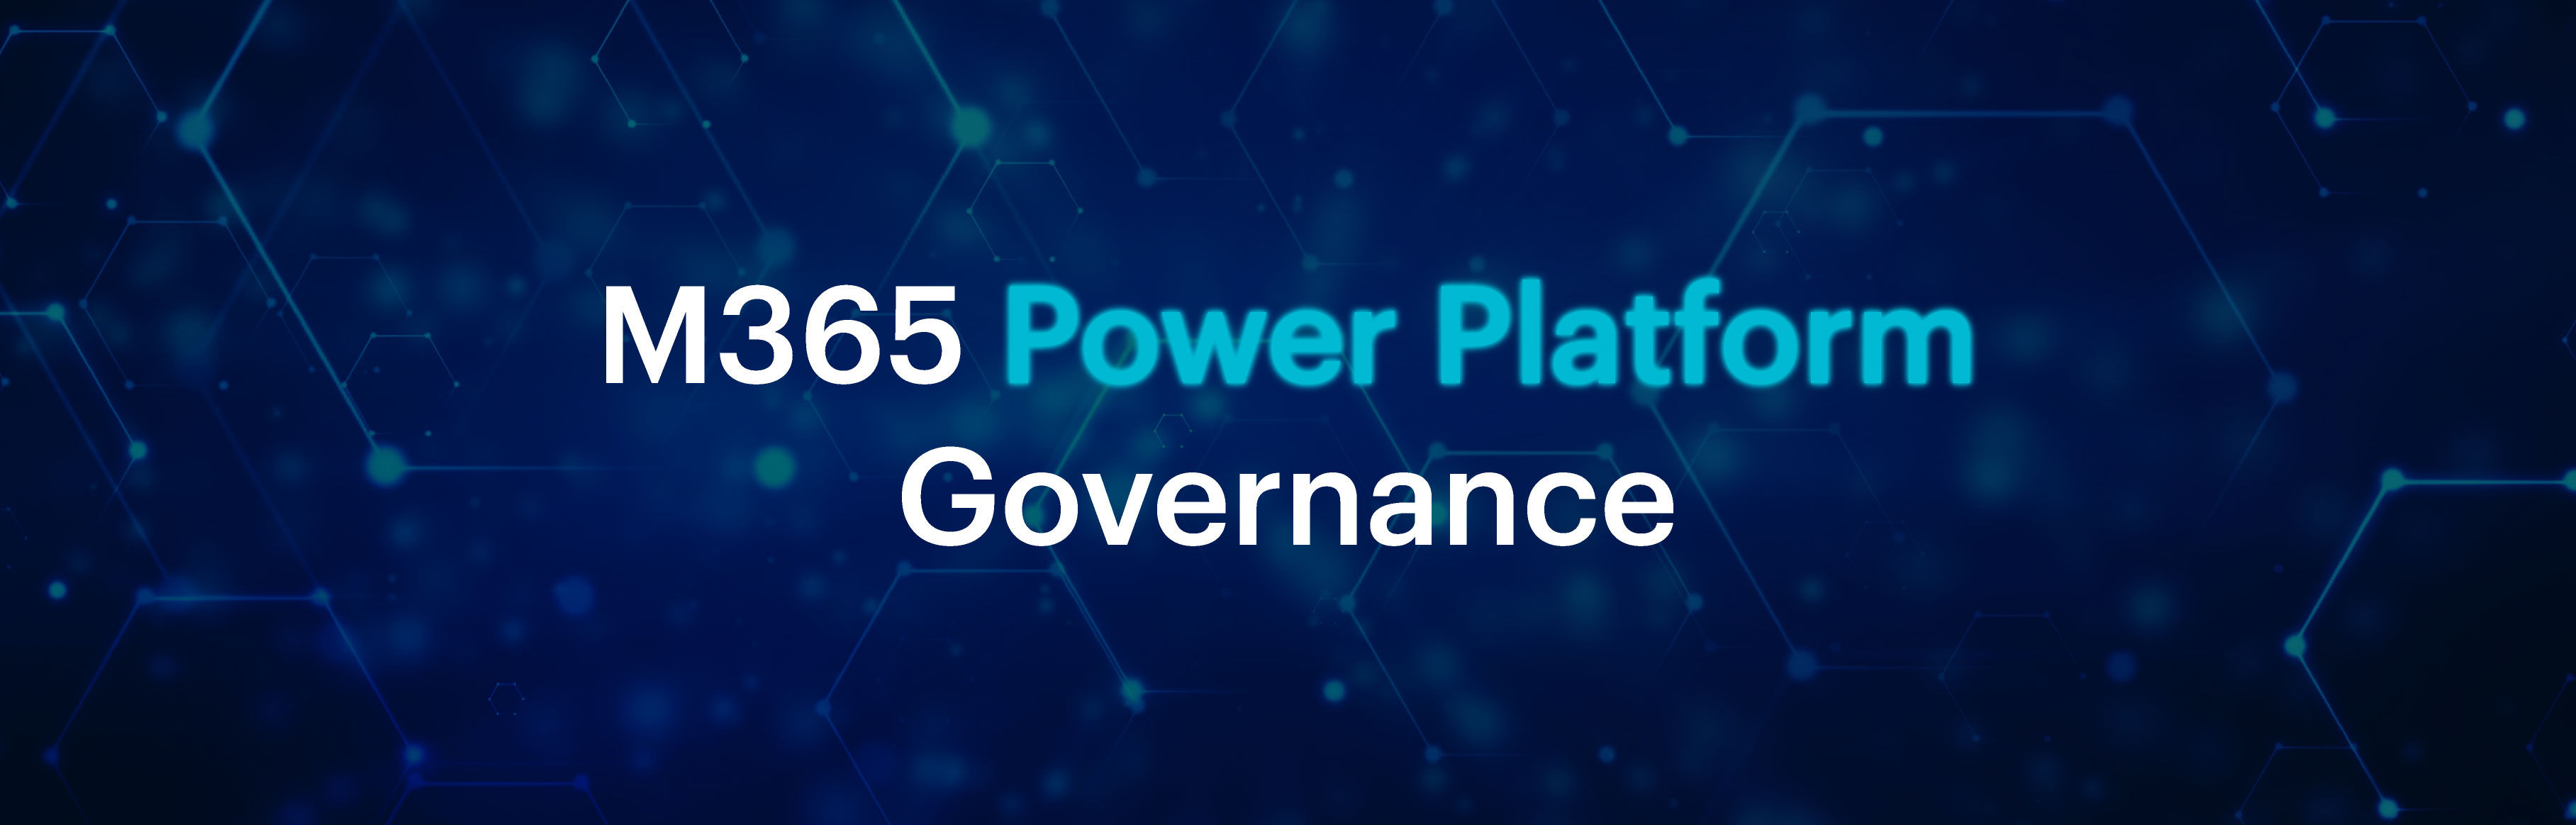 M365 Power Platform Governance